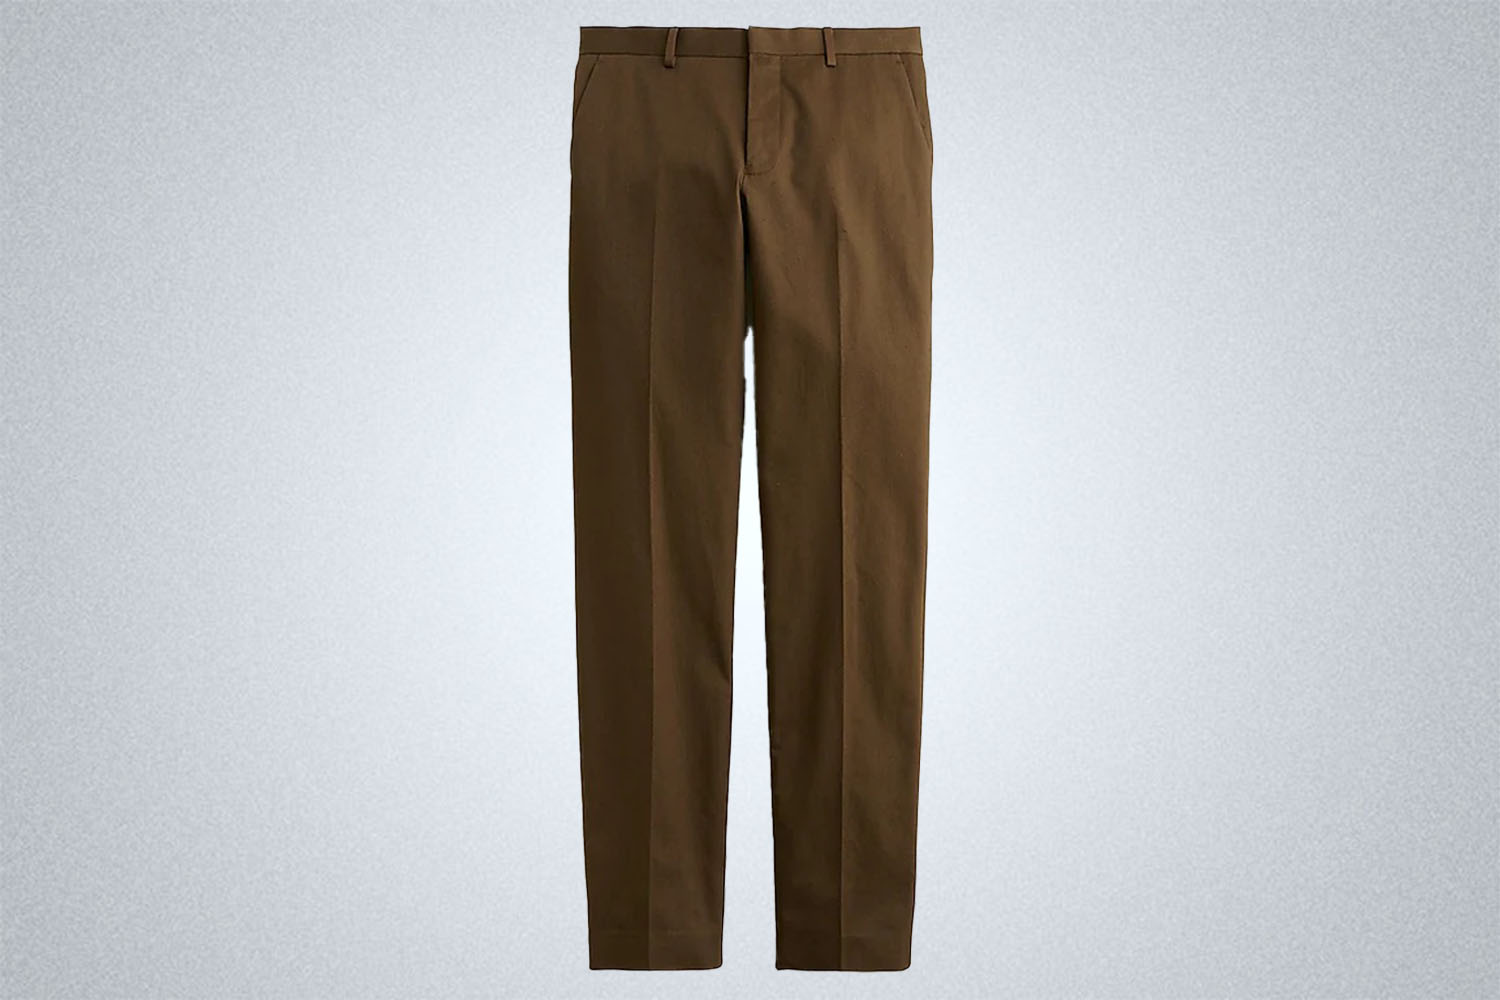 J.Crew Ludlow Italian Chino Slim-Fit Suit Pants